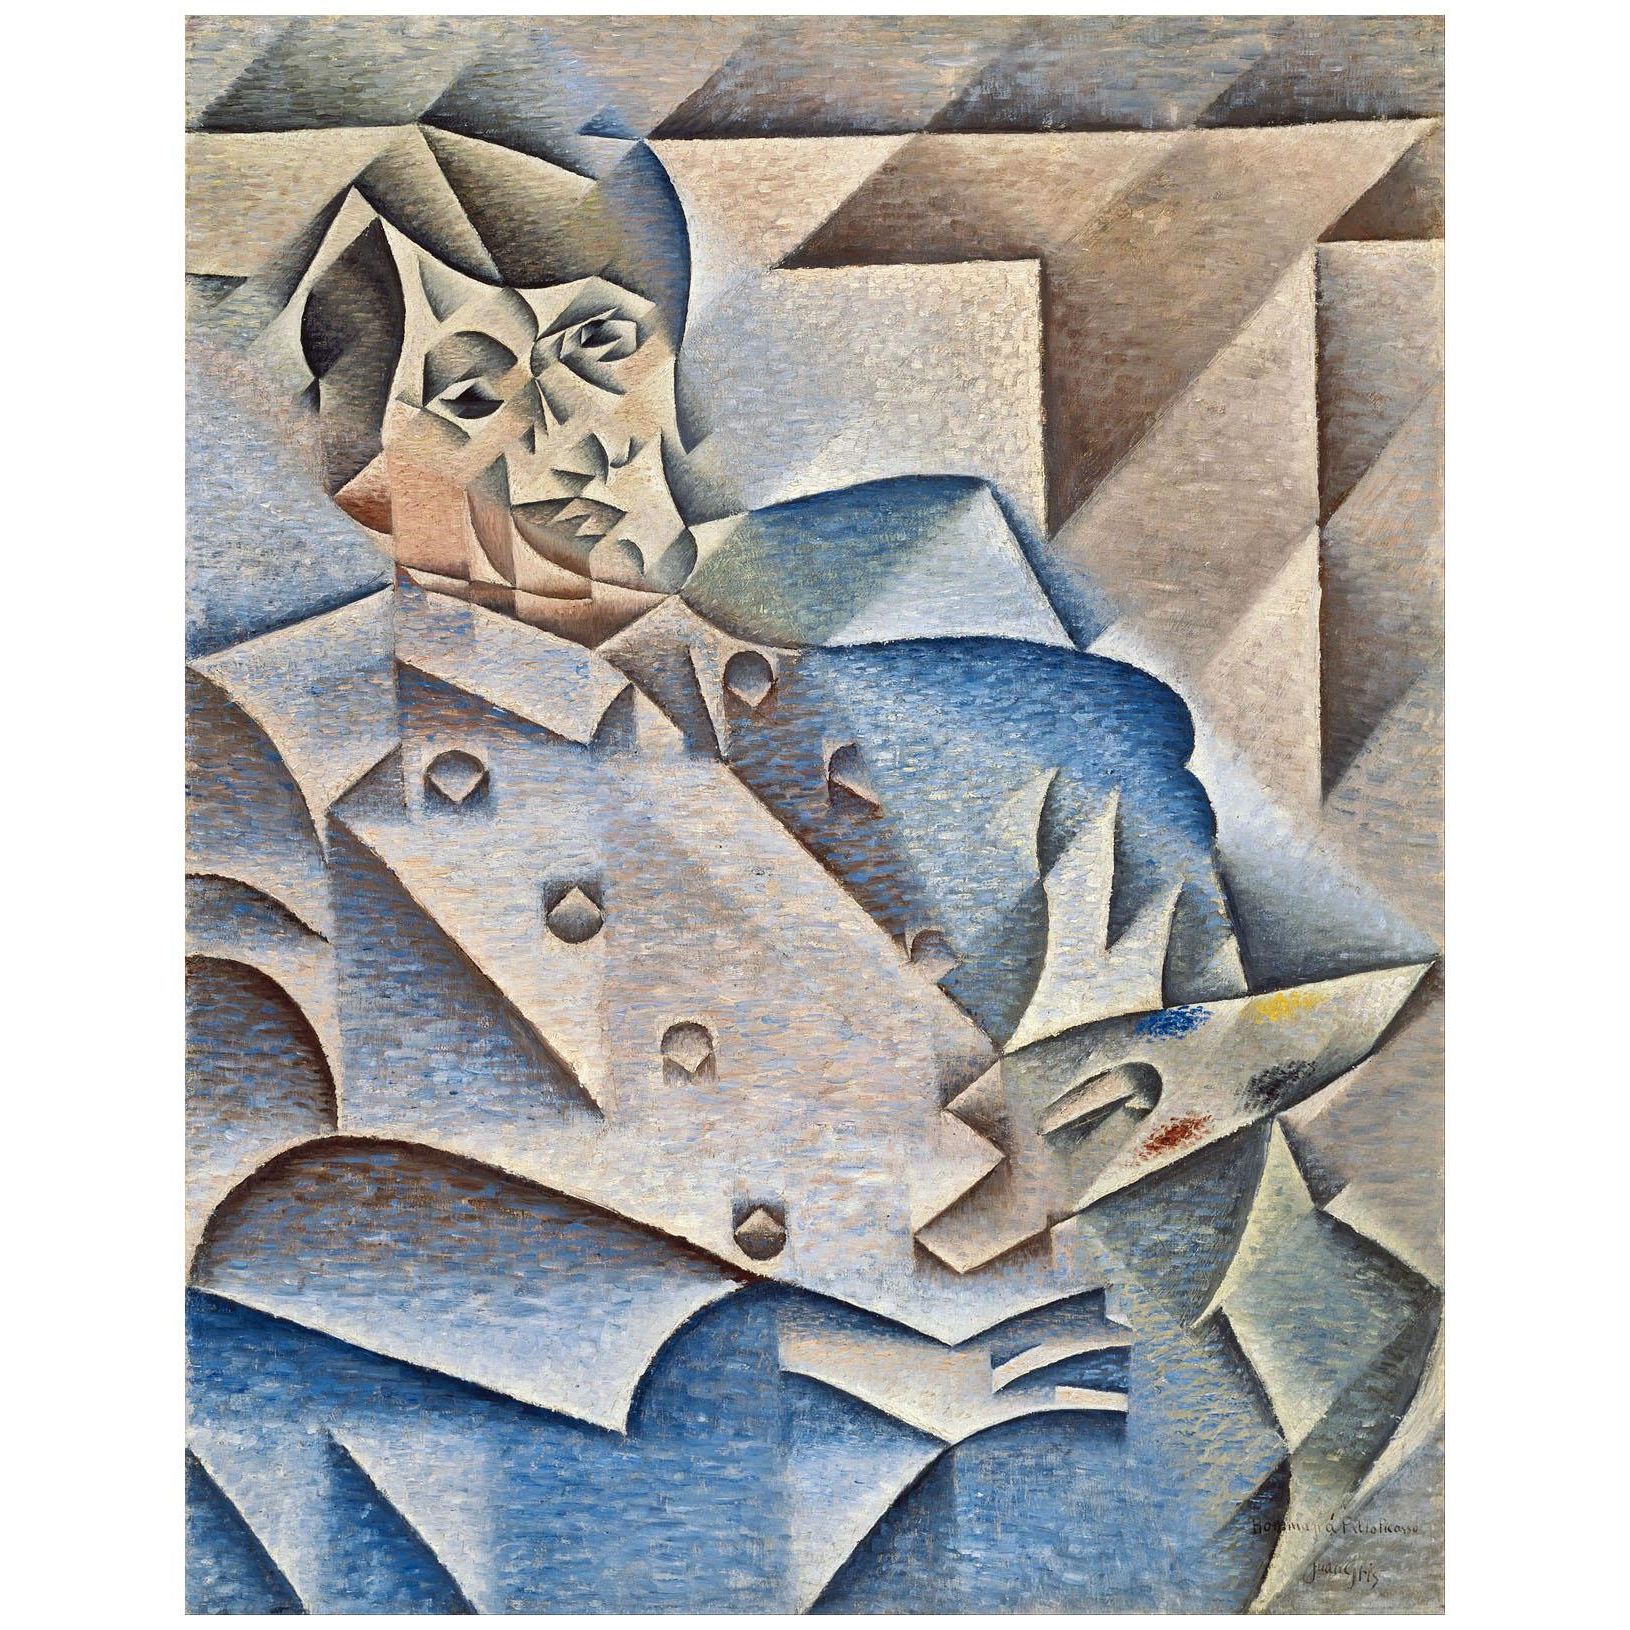 Juan Gris. Portrait de Pablo Picasso. 1912. Art Institute of Chicago